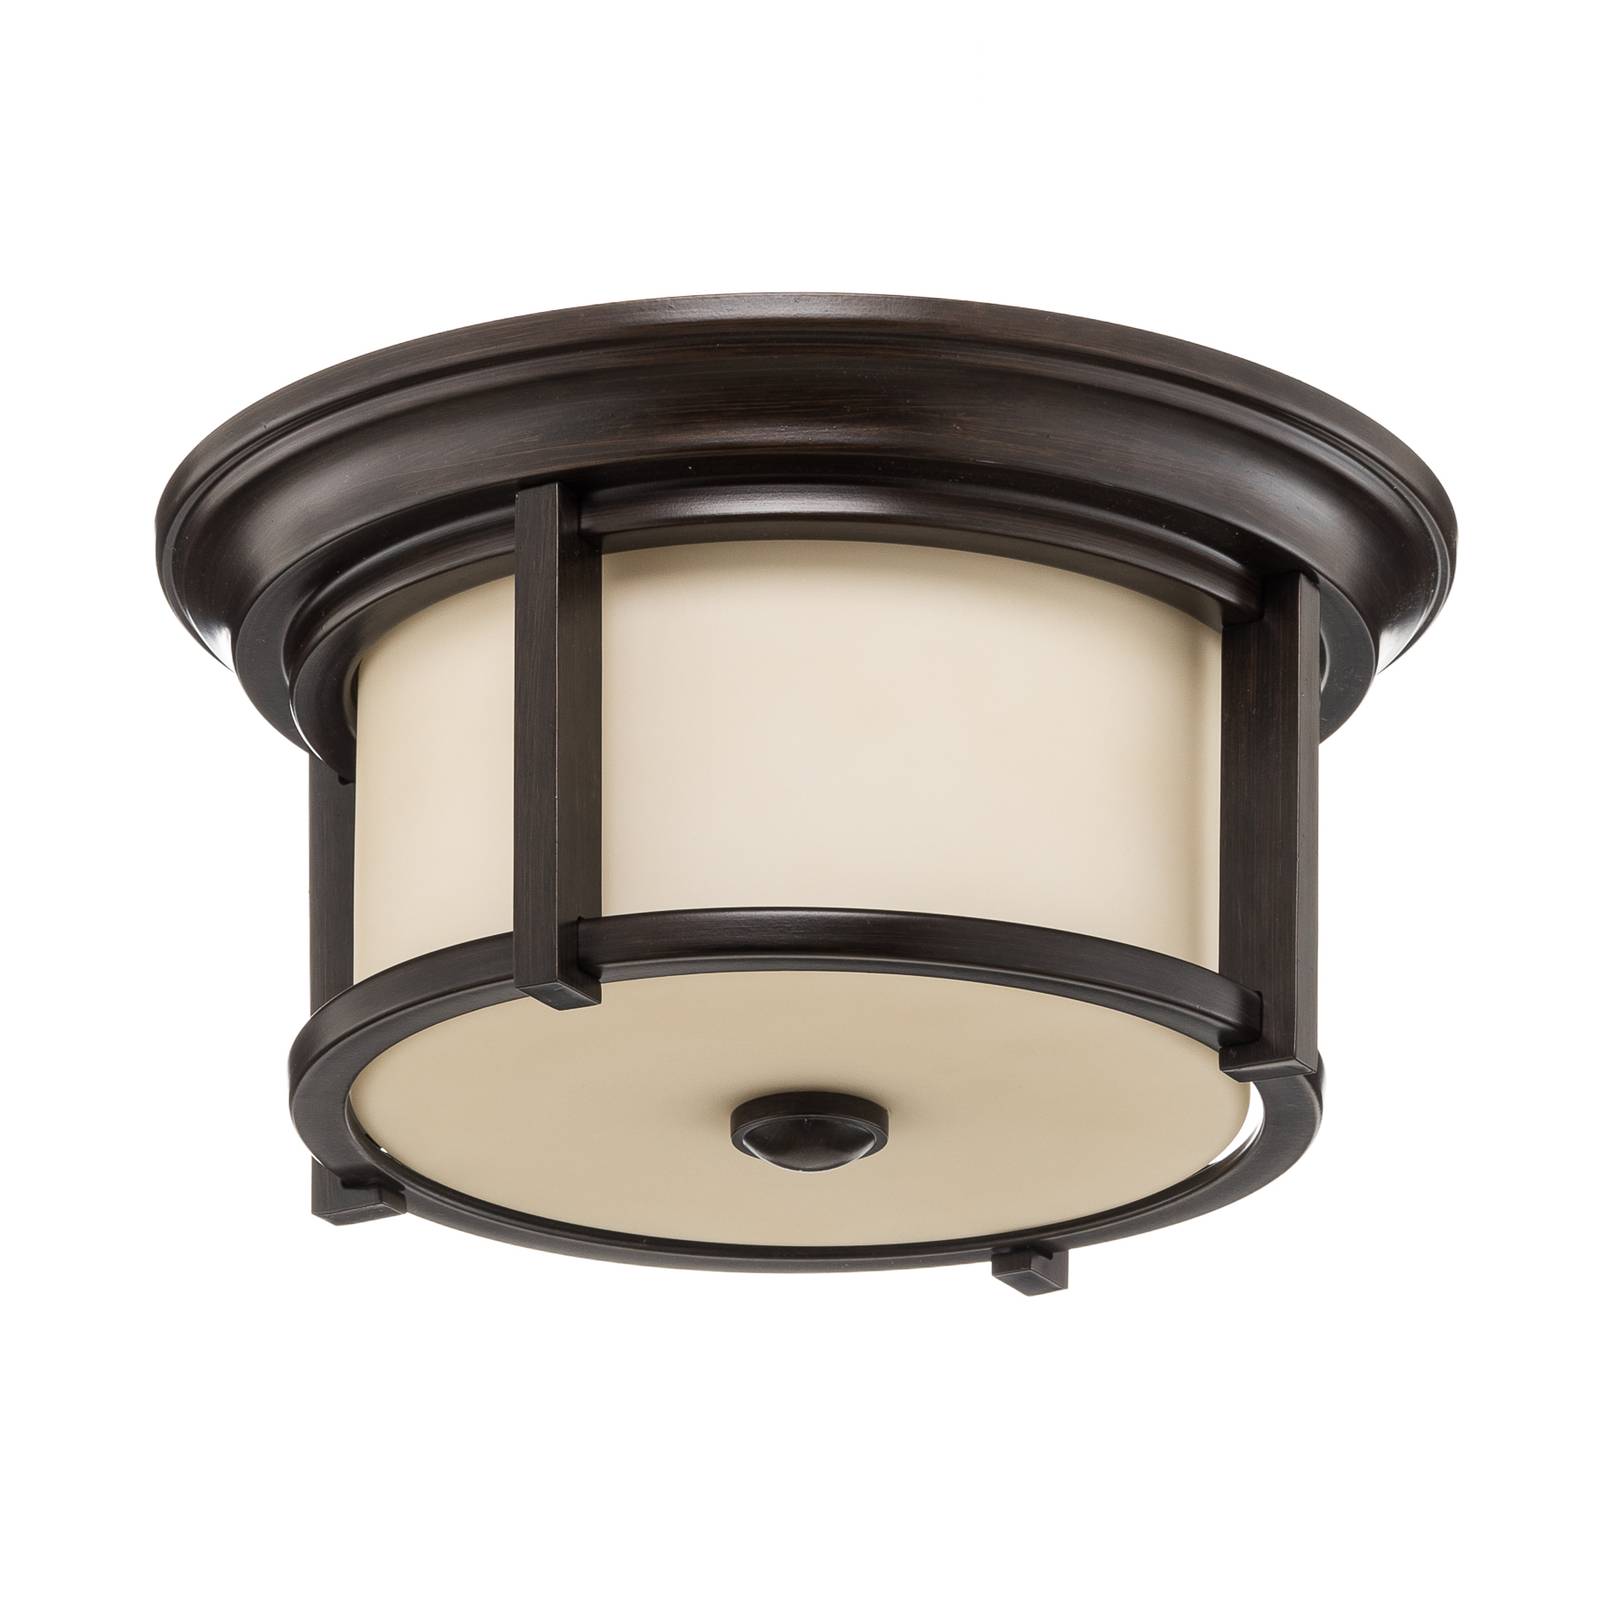 Versatile outdoor ceiling lamp Merrill